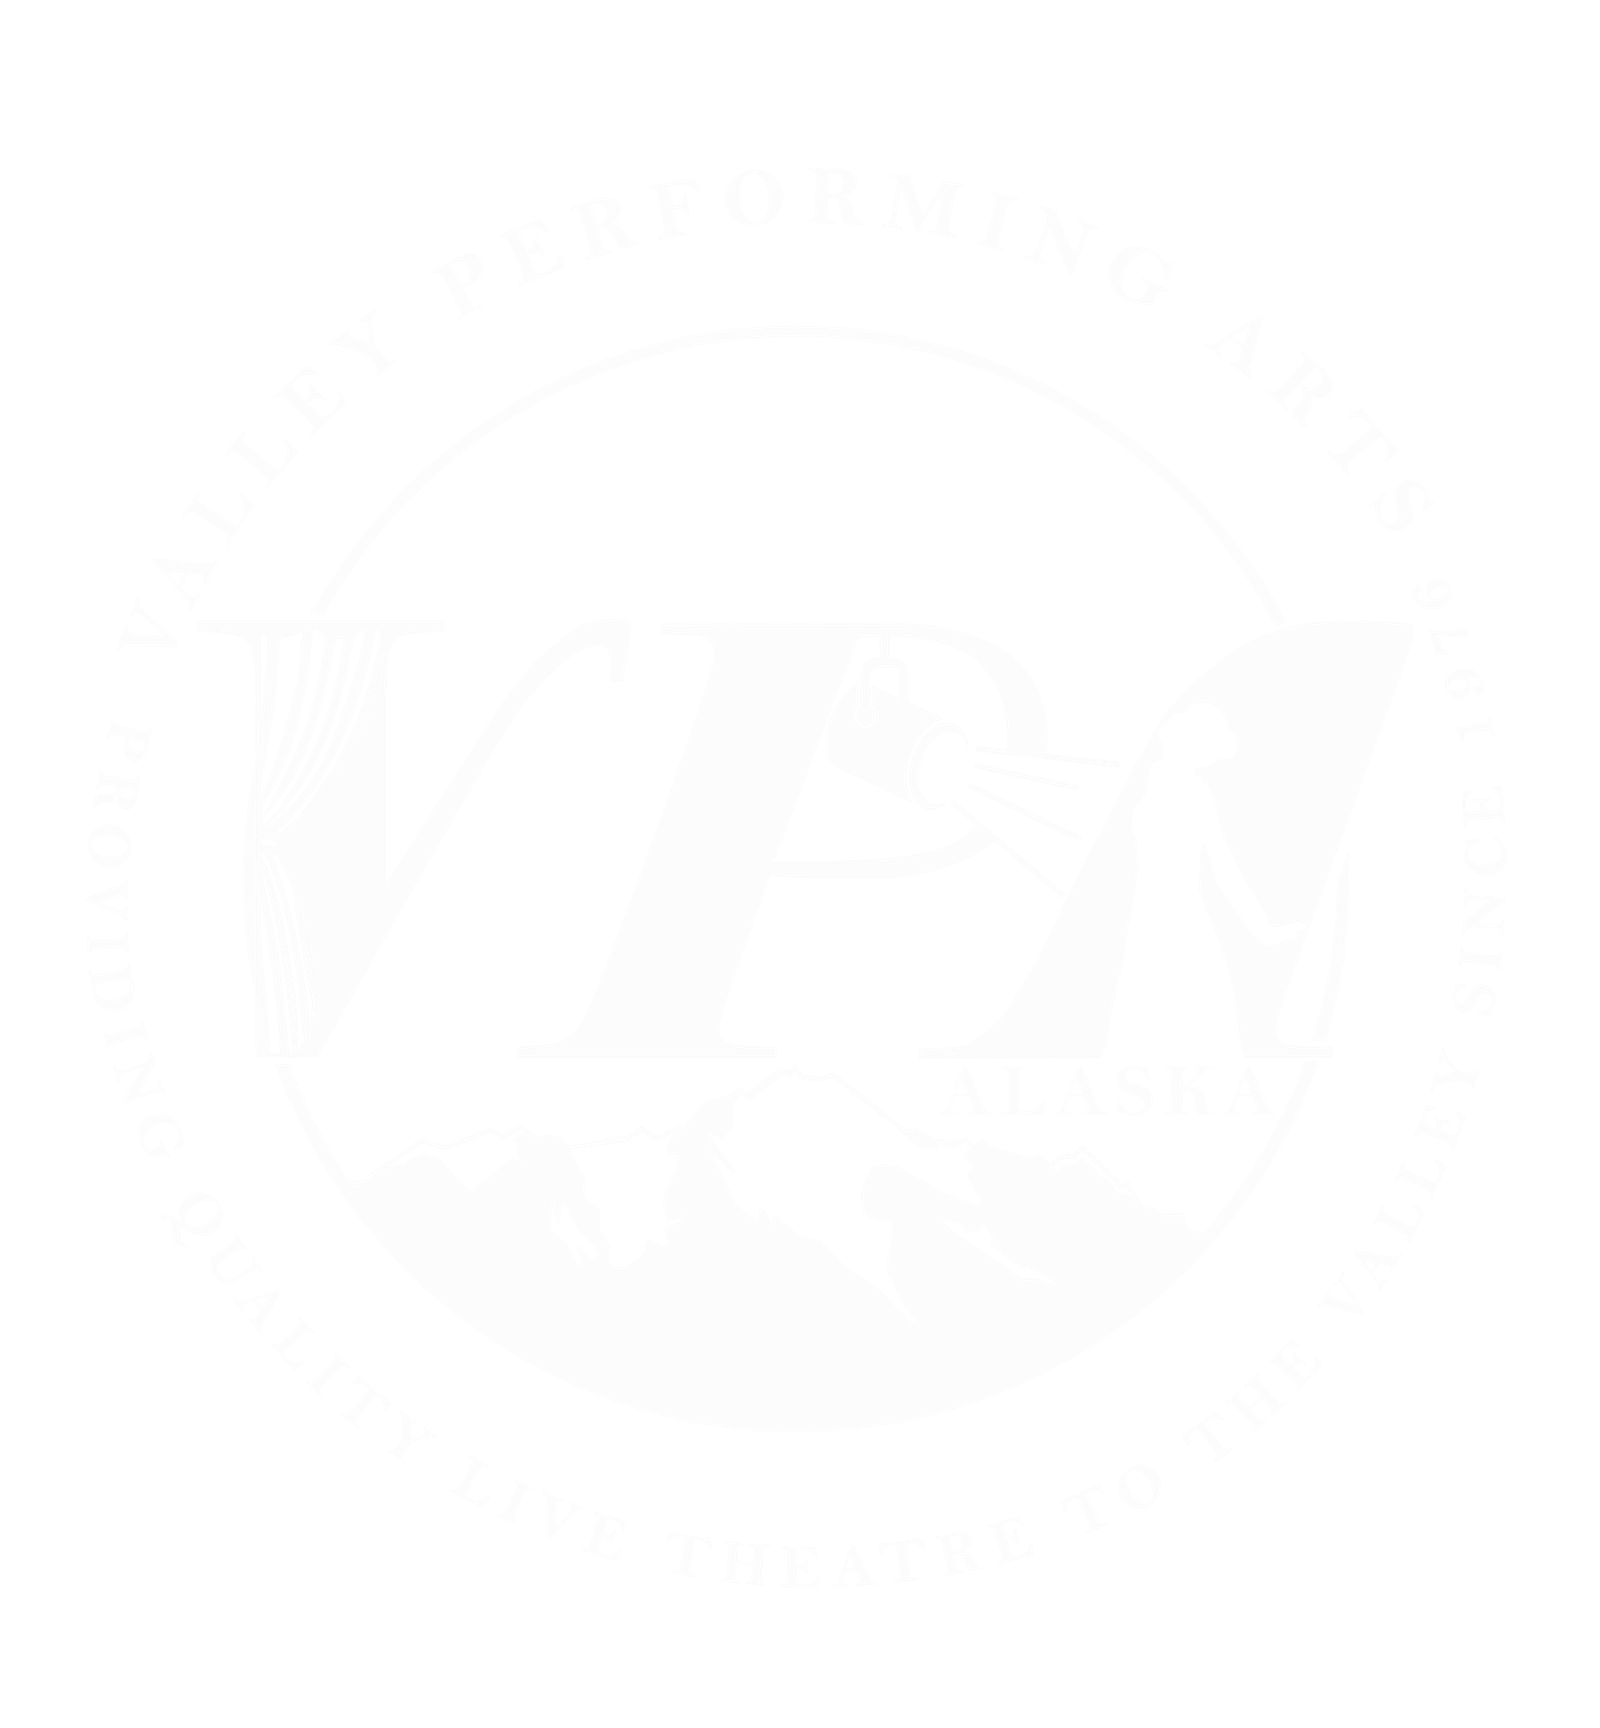 Valley Performing Arts